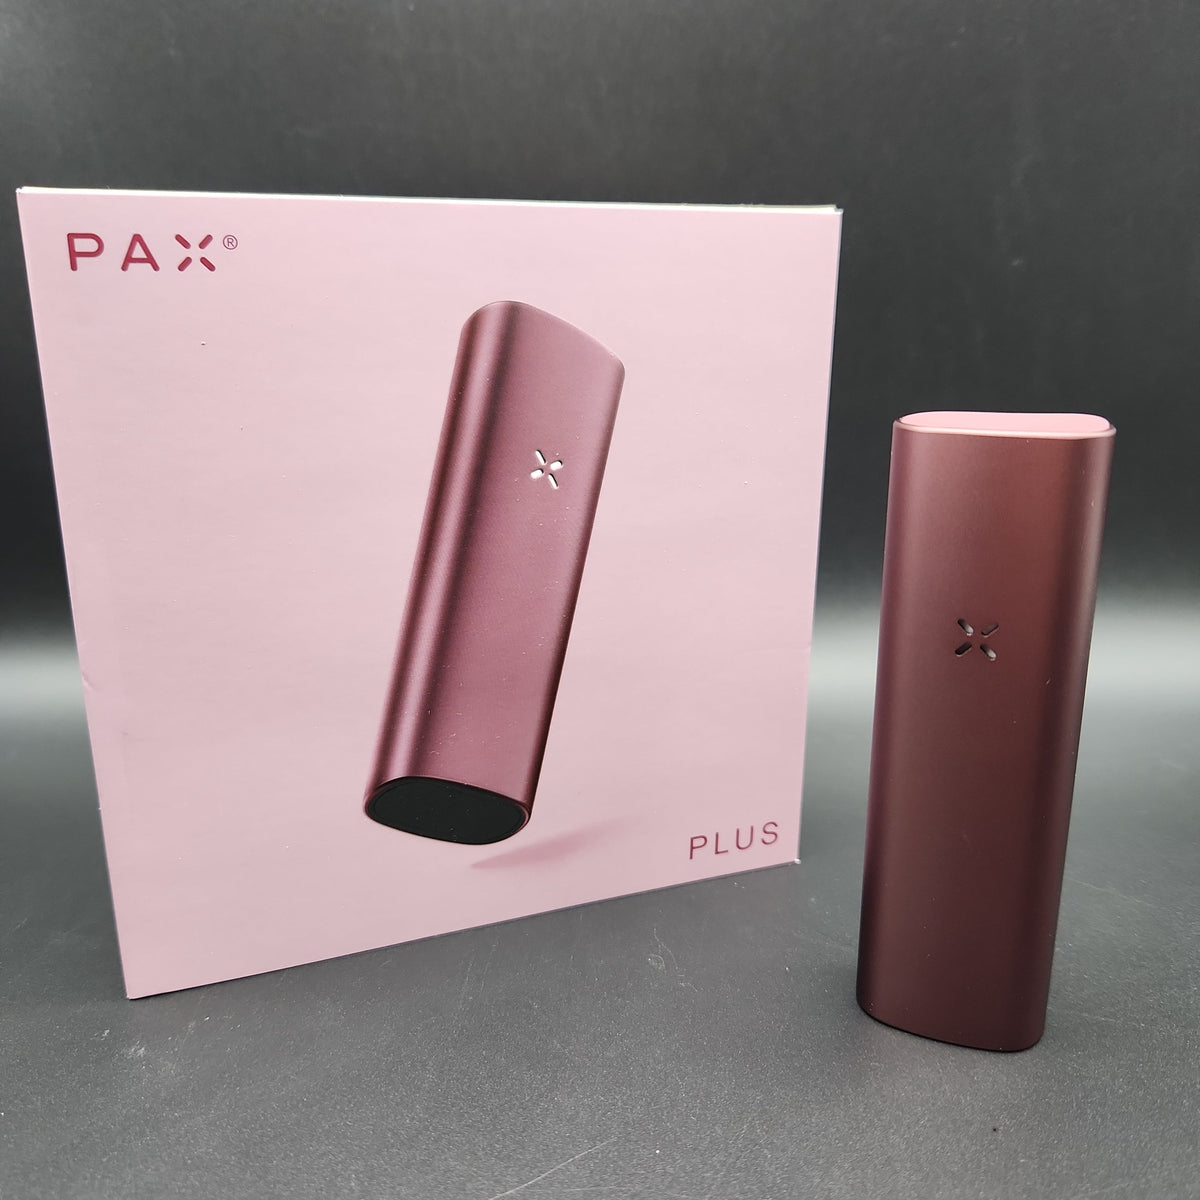 Pax Plus - Portable 2 in 1 Vaporizer